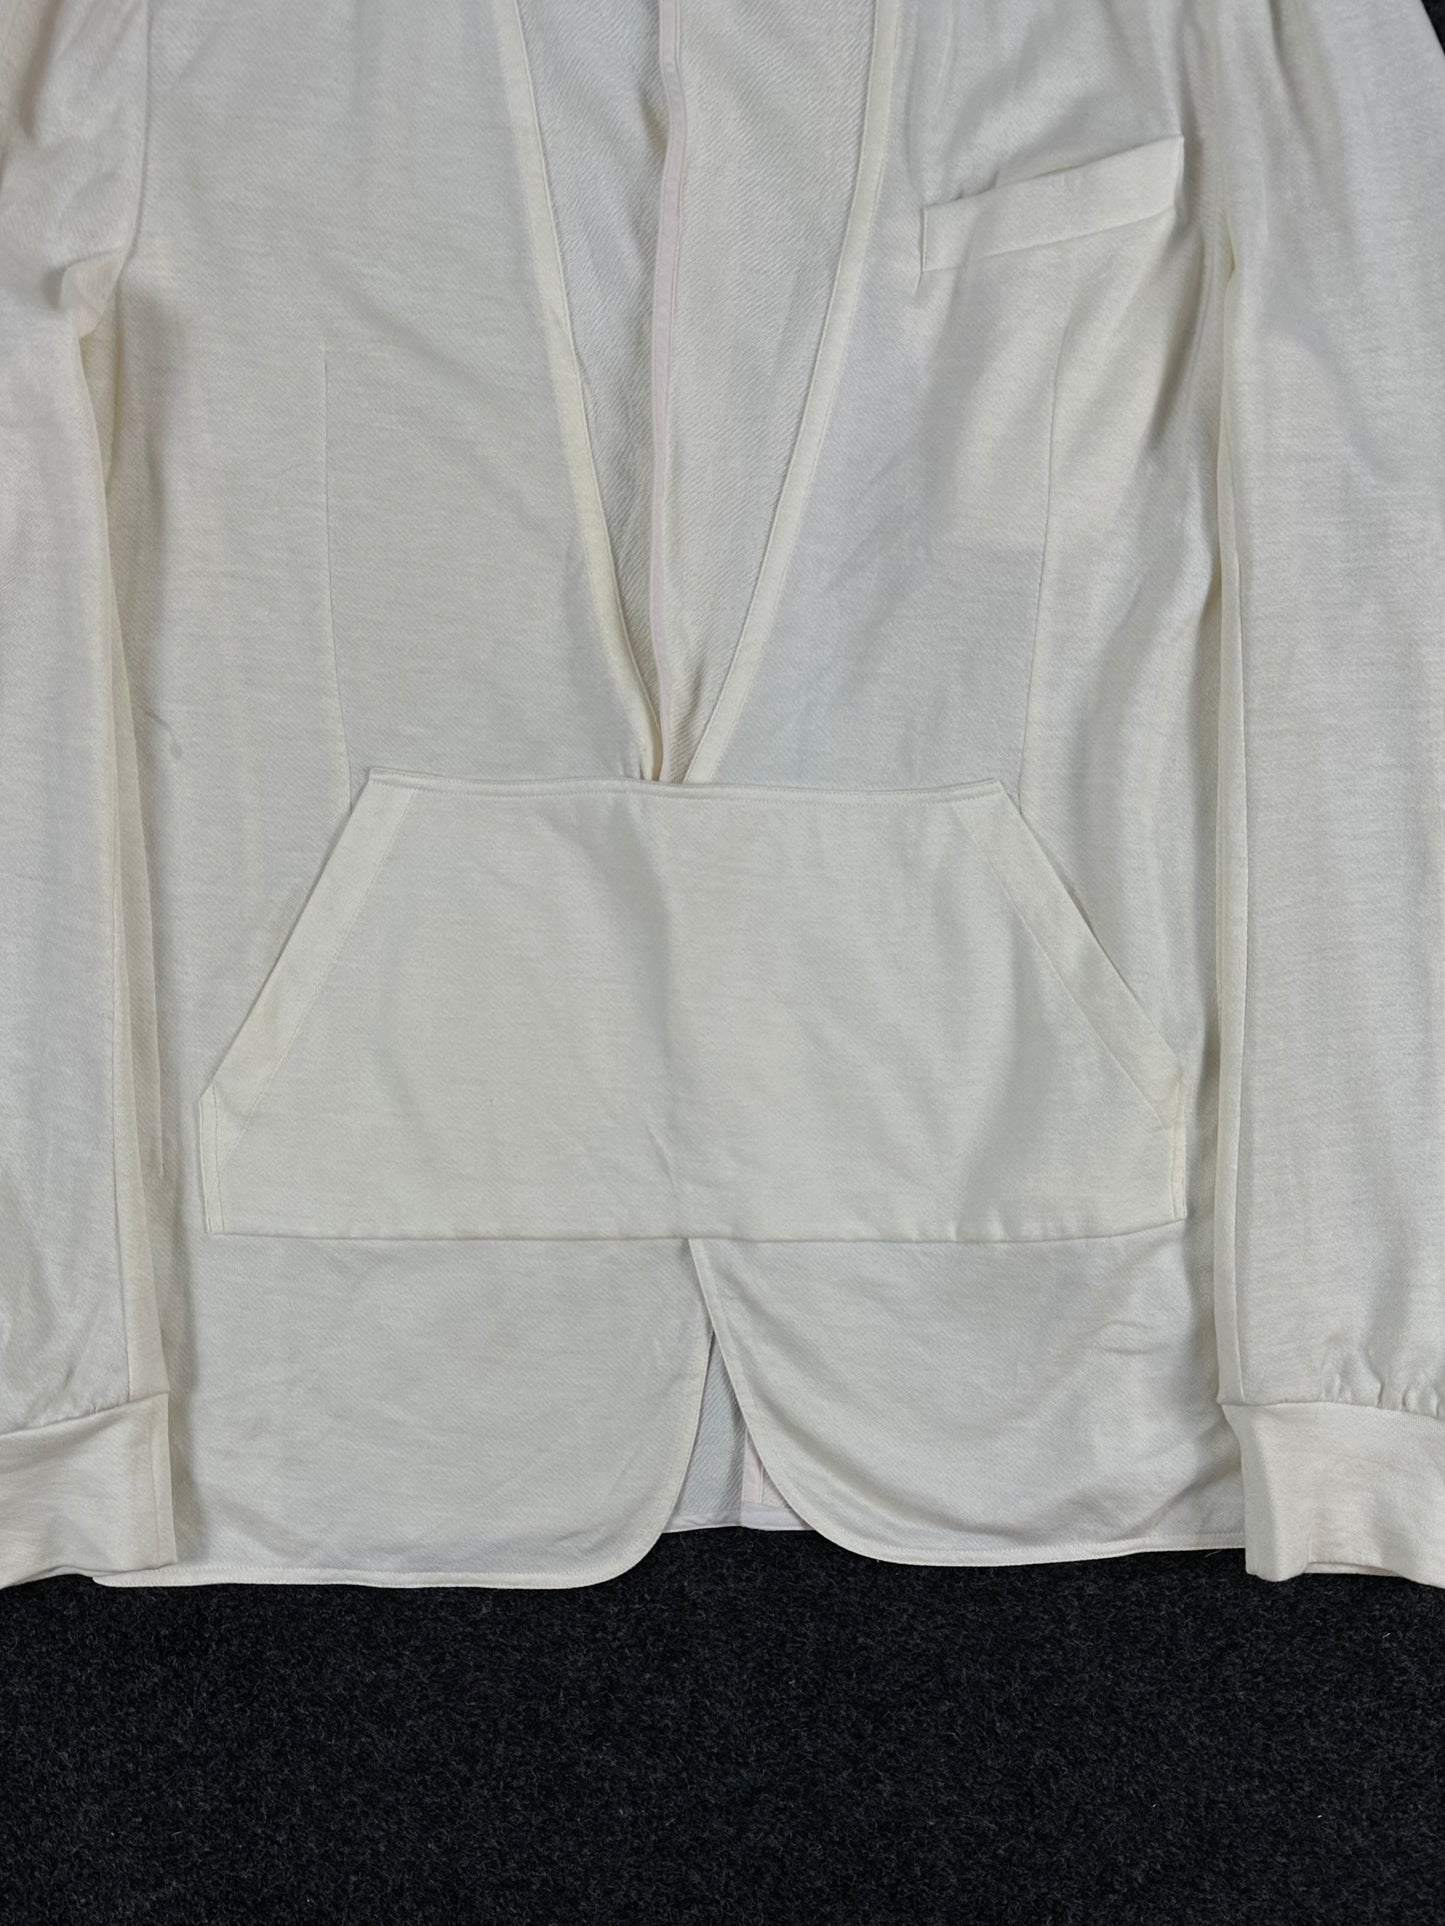 2000's Cotton Shirt (46)